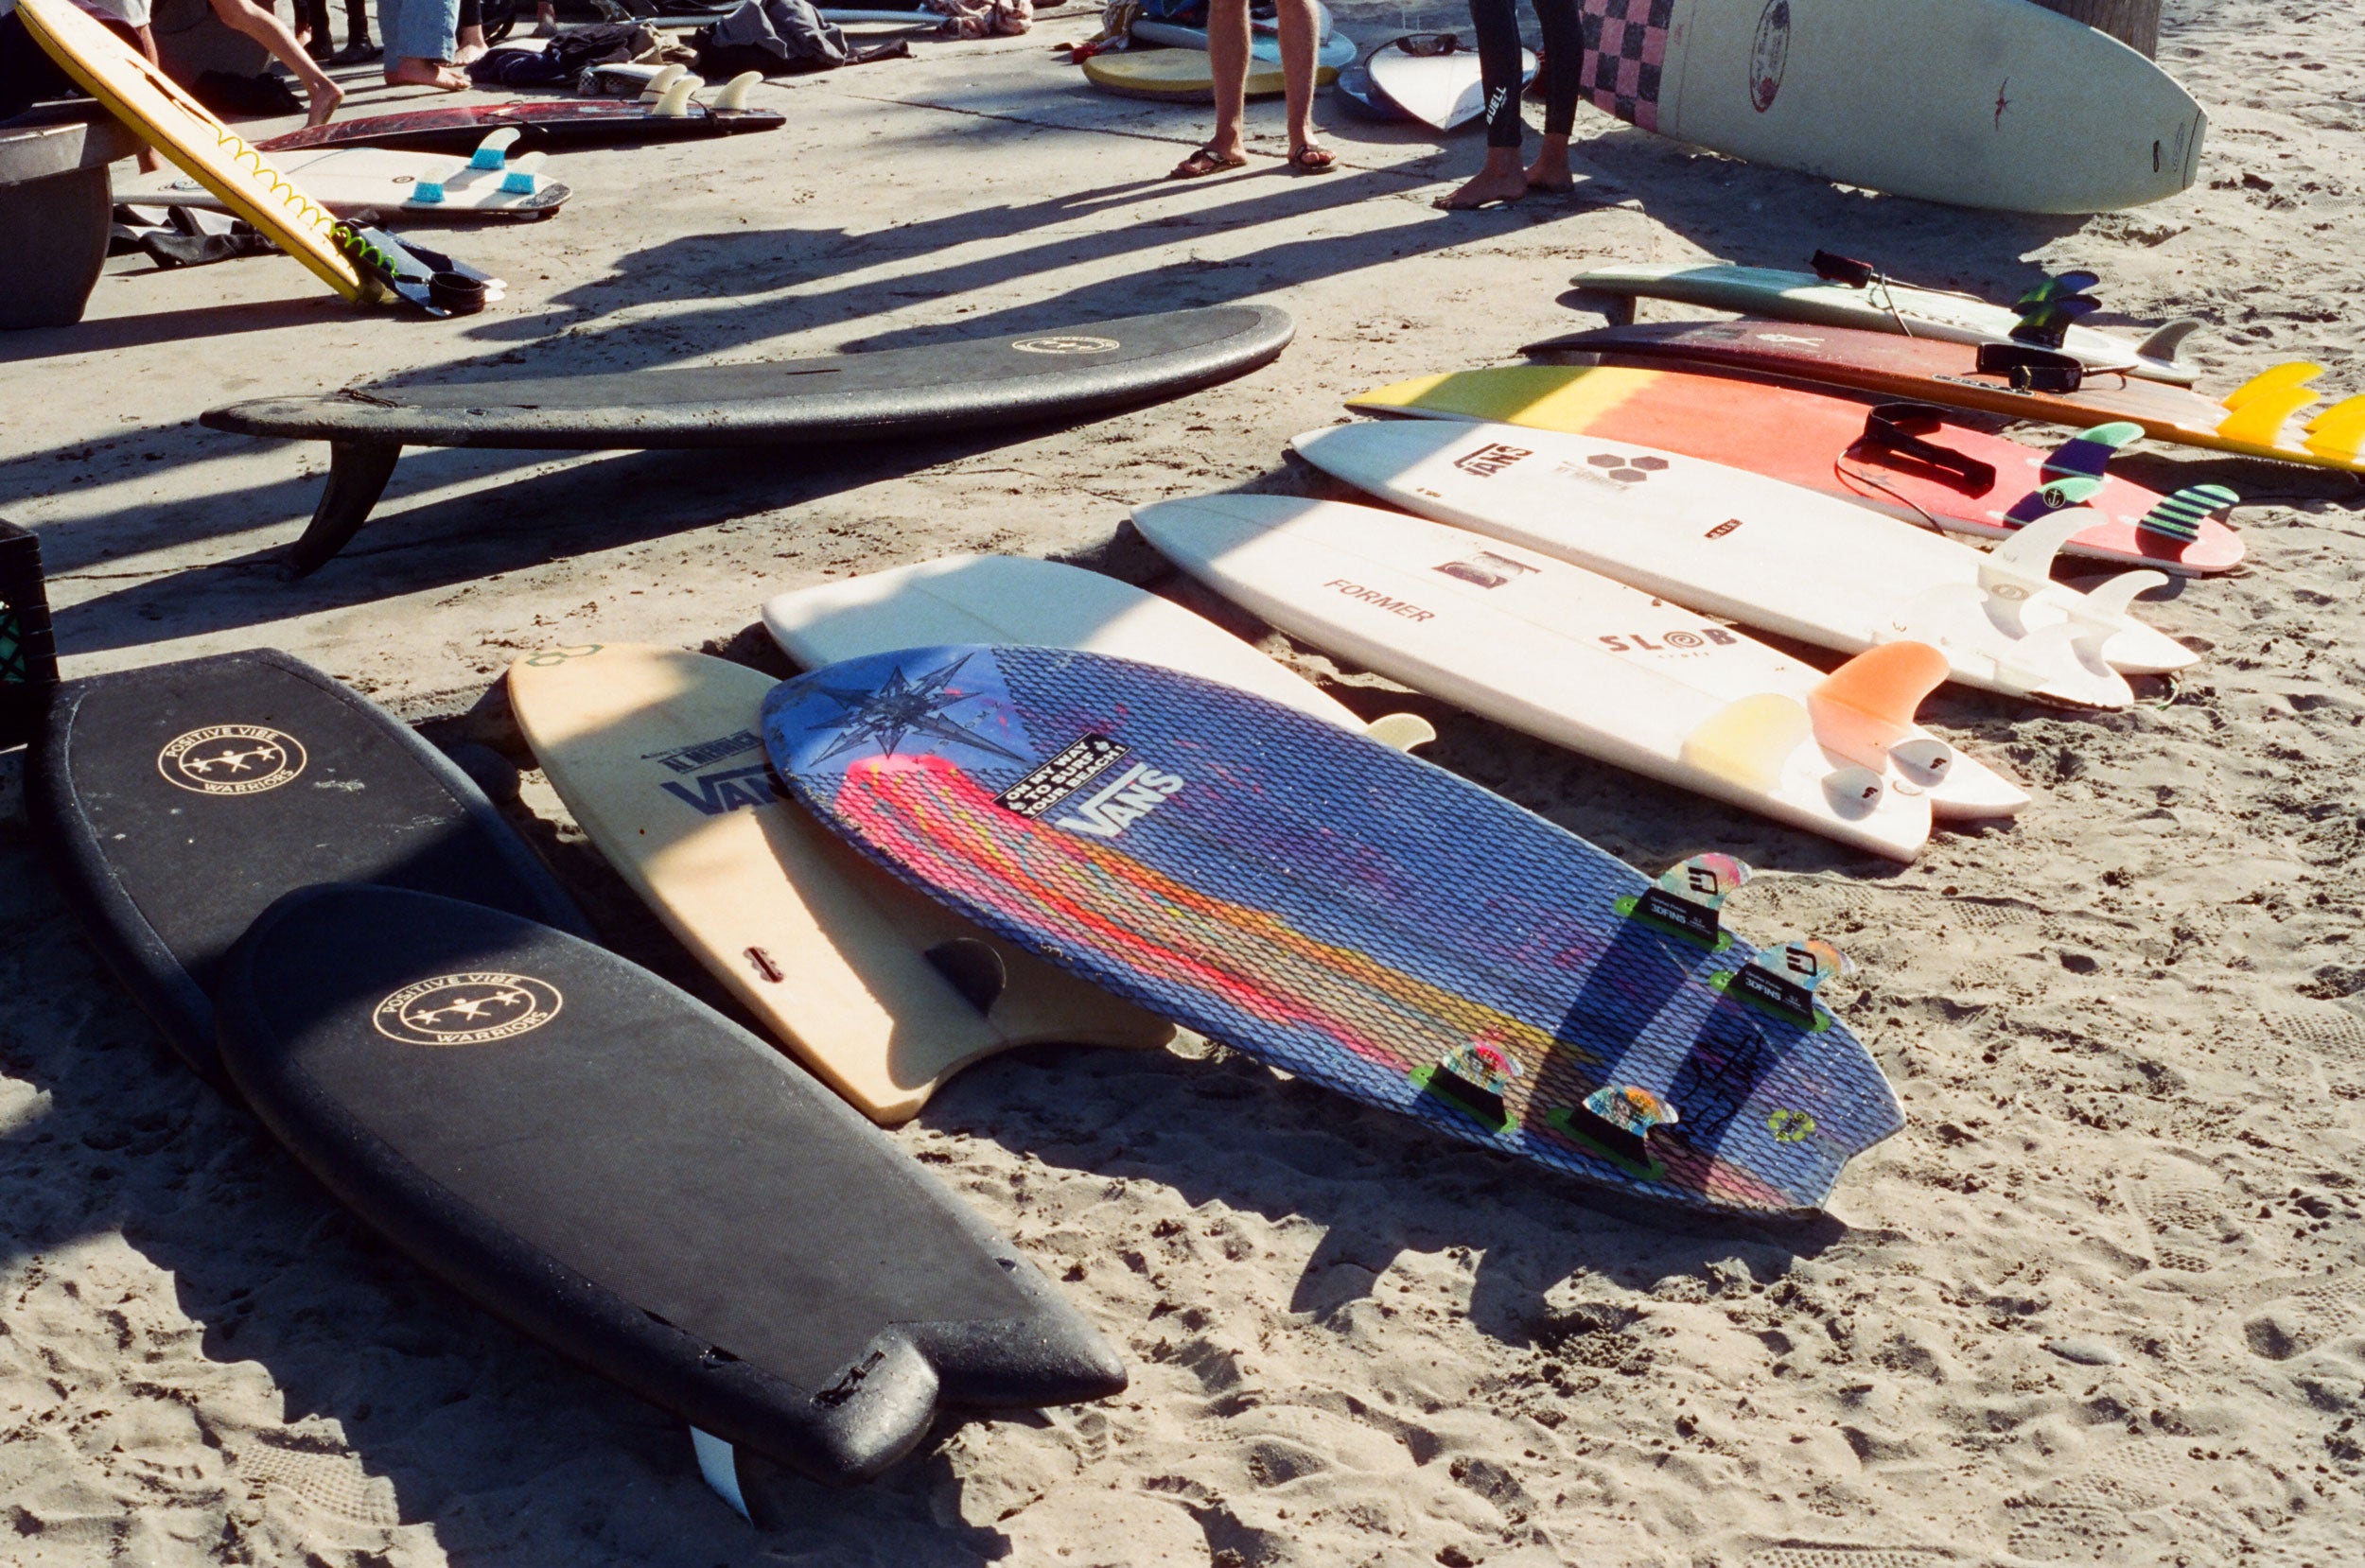 surfboards on the beach